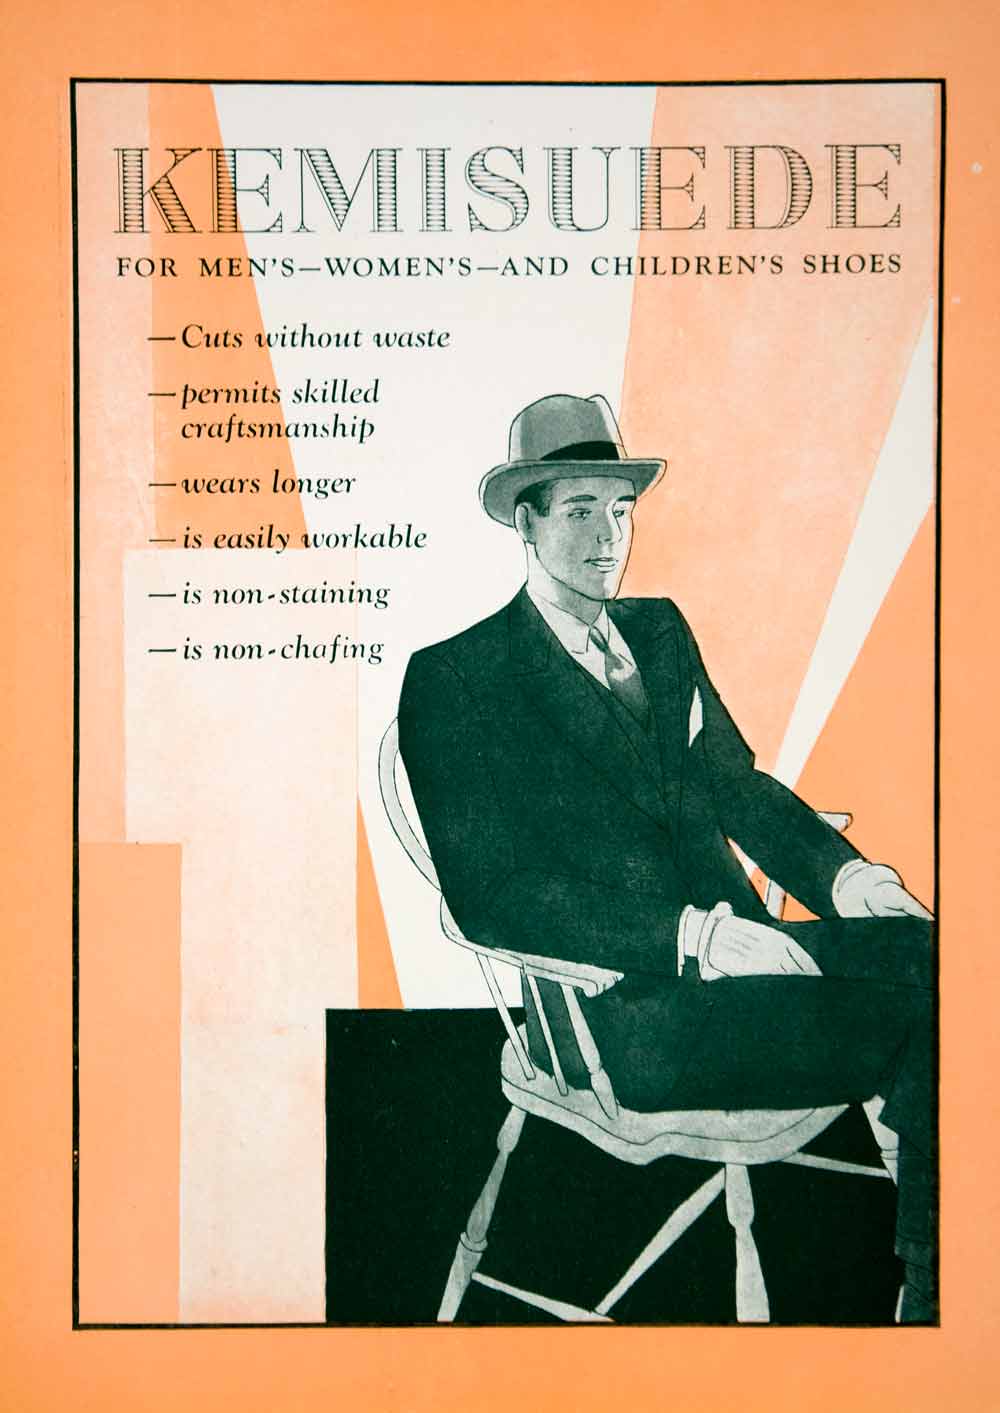 1929 Ads Kemisuede Shoe Men Fashion Portrait Art Deco Orange Akron Ohio YBSR1